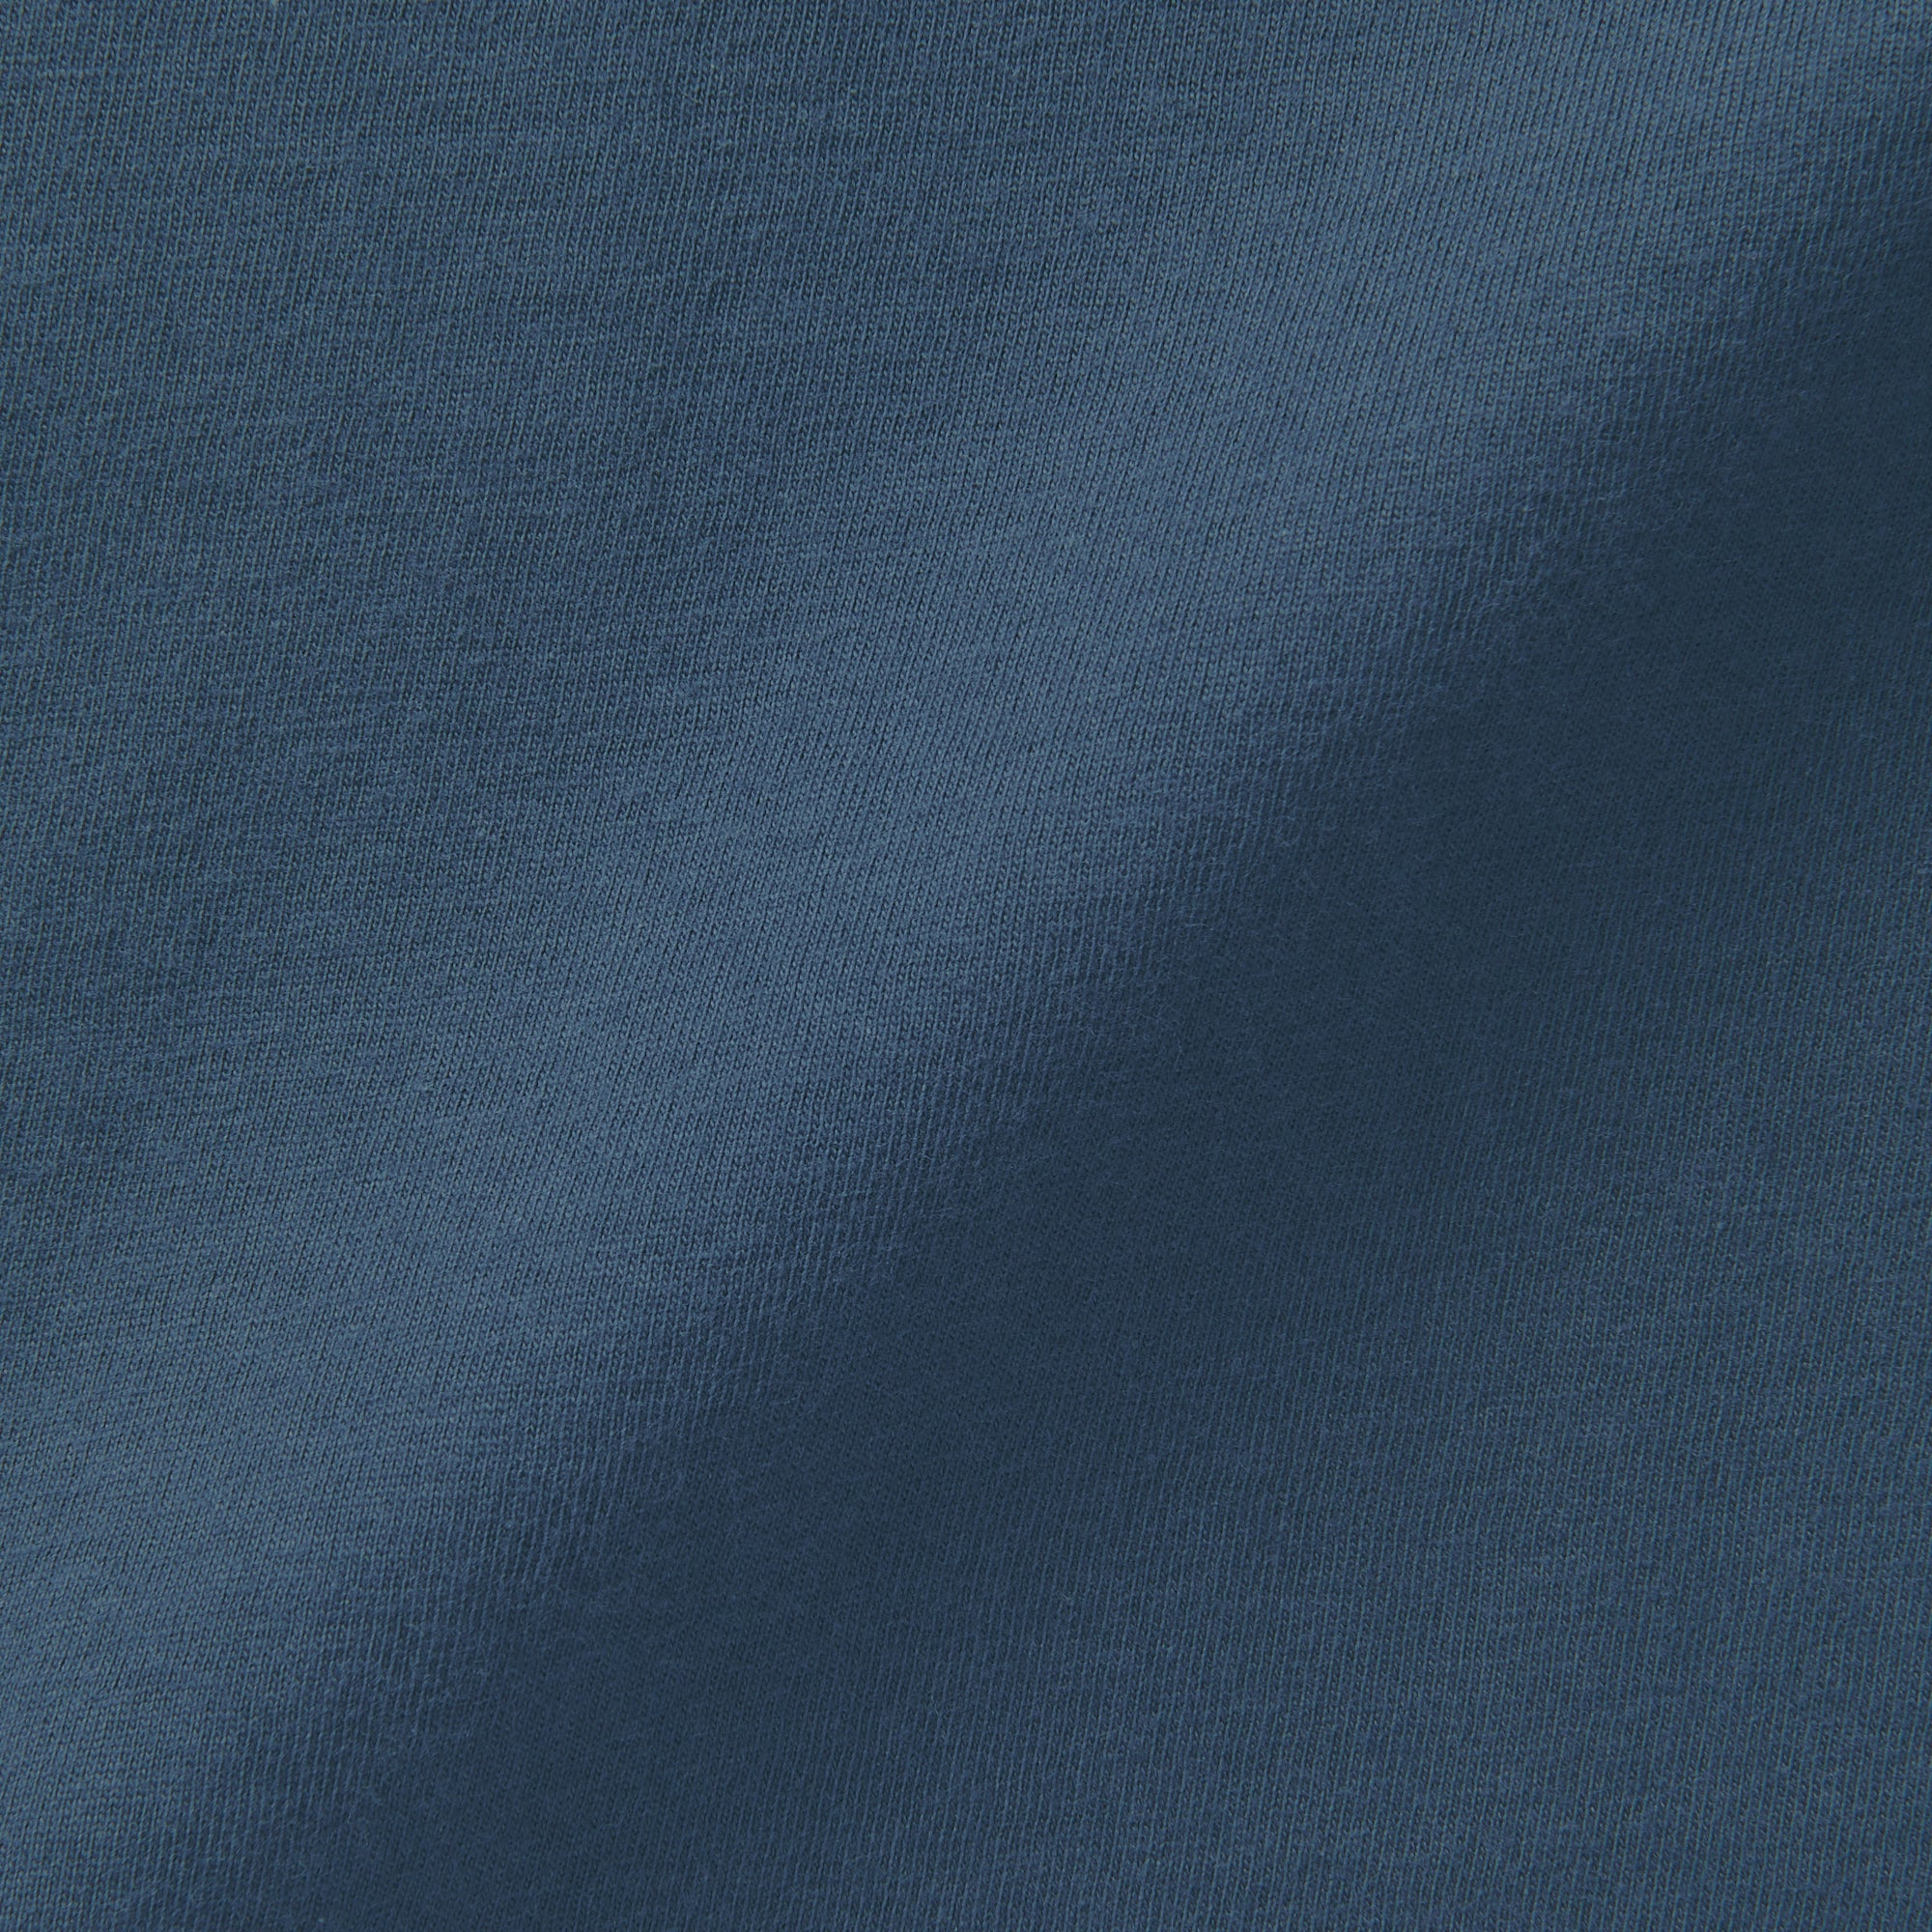 Men's Indian Cotton Jersey Stitch V-Neck Long Sleeve T-Shirt